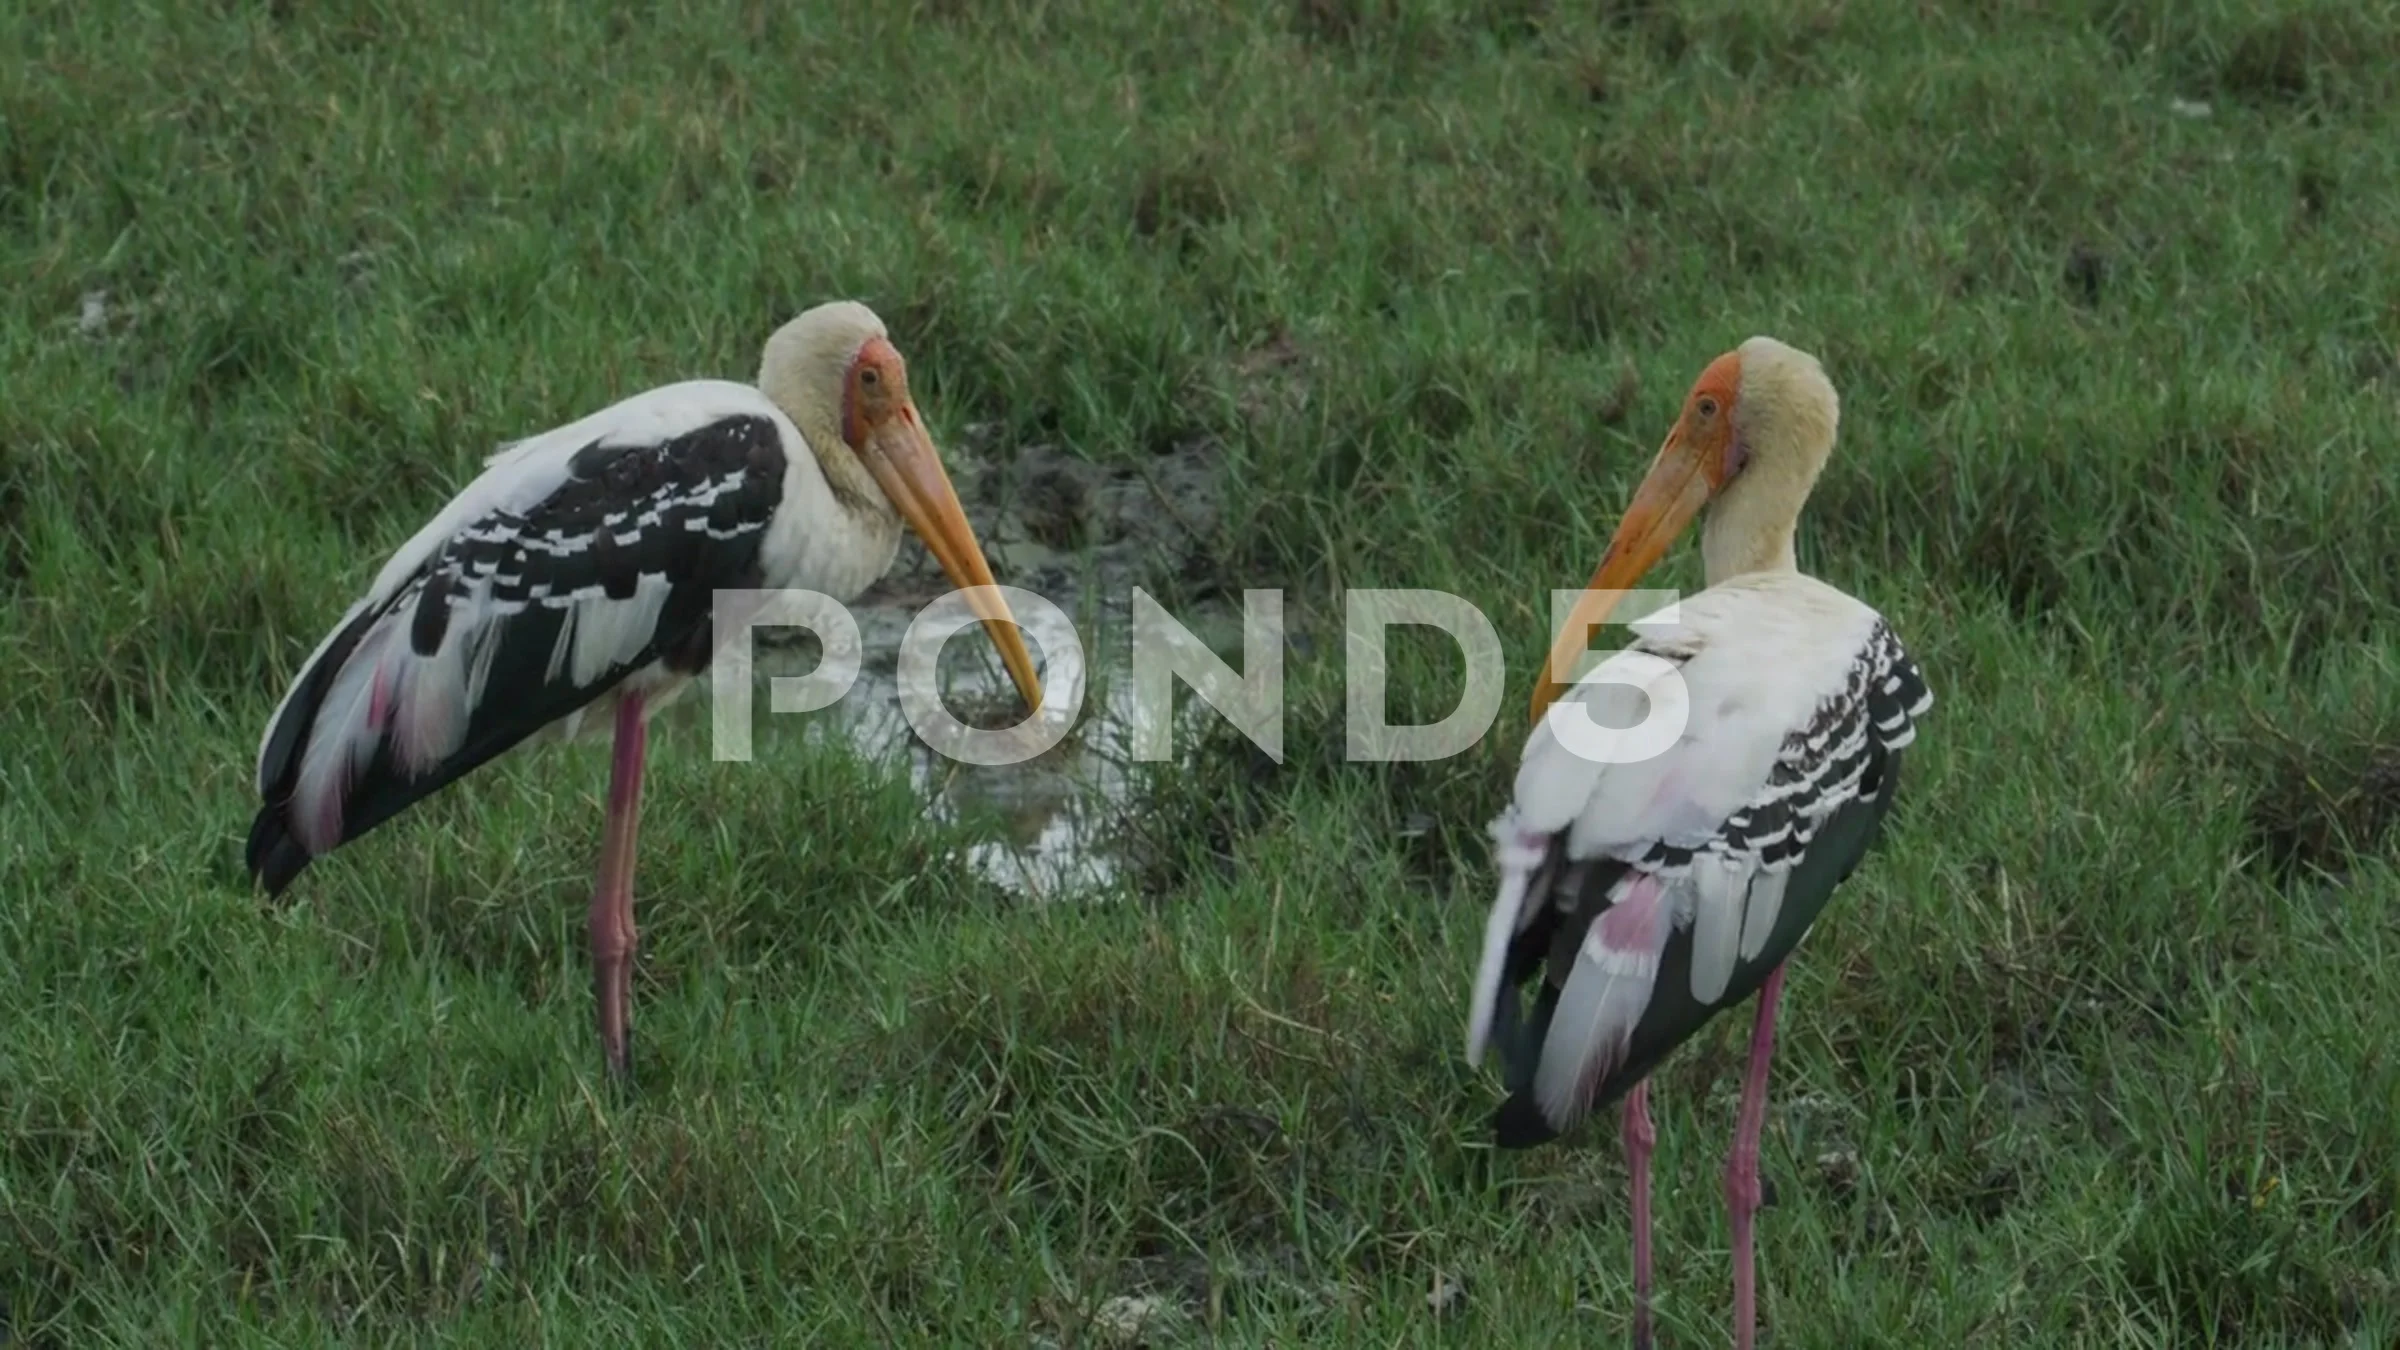 Storke Wetland